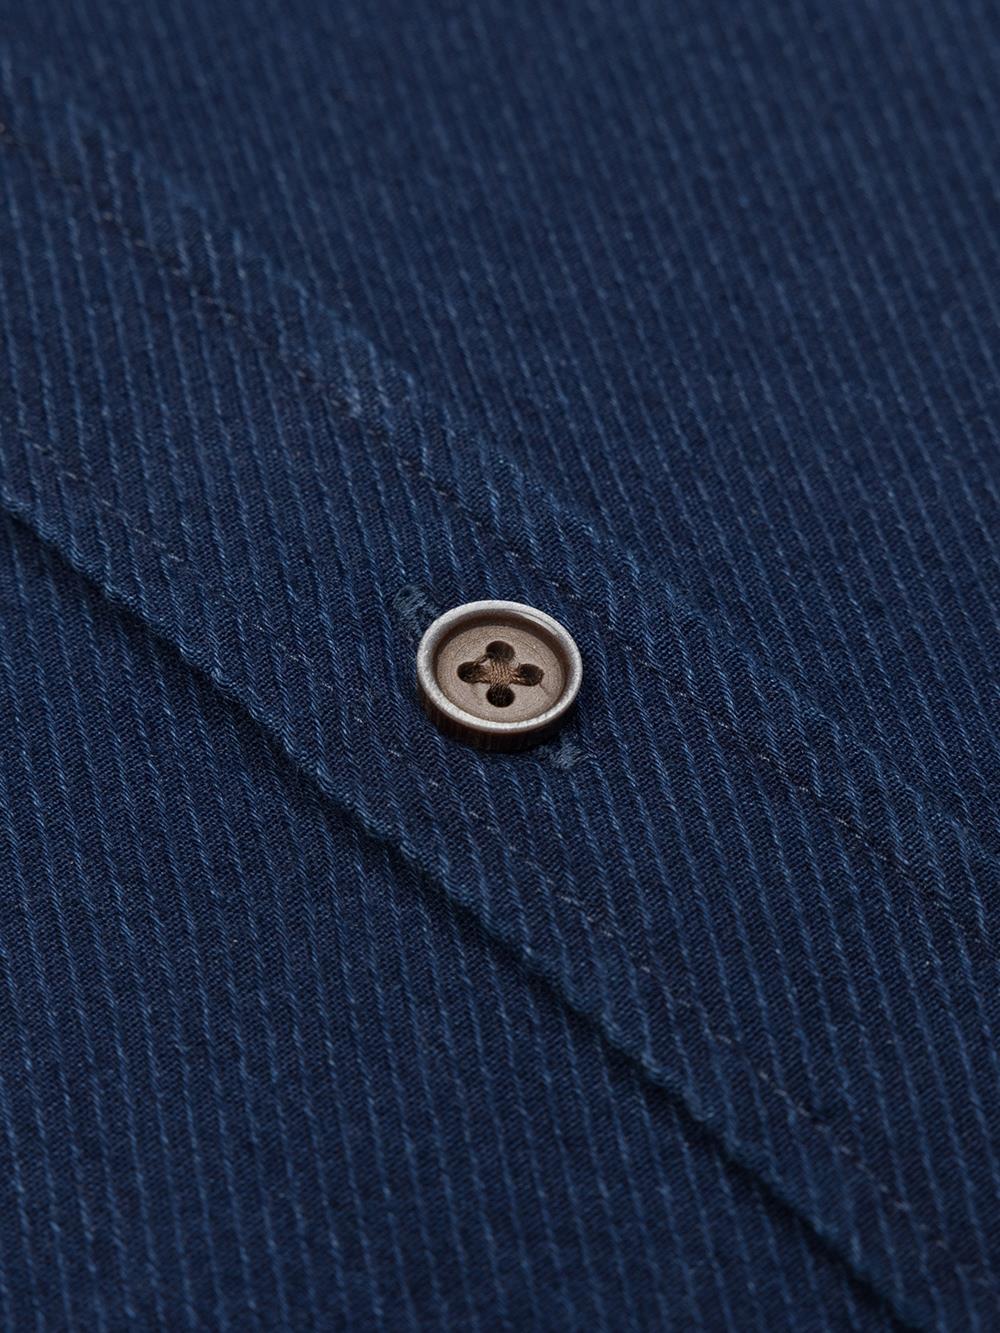 Alford shirt in indigo twill - Button down collar